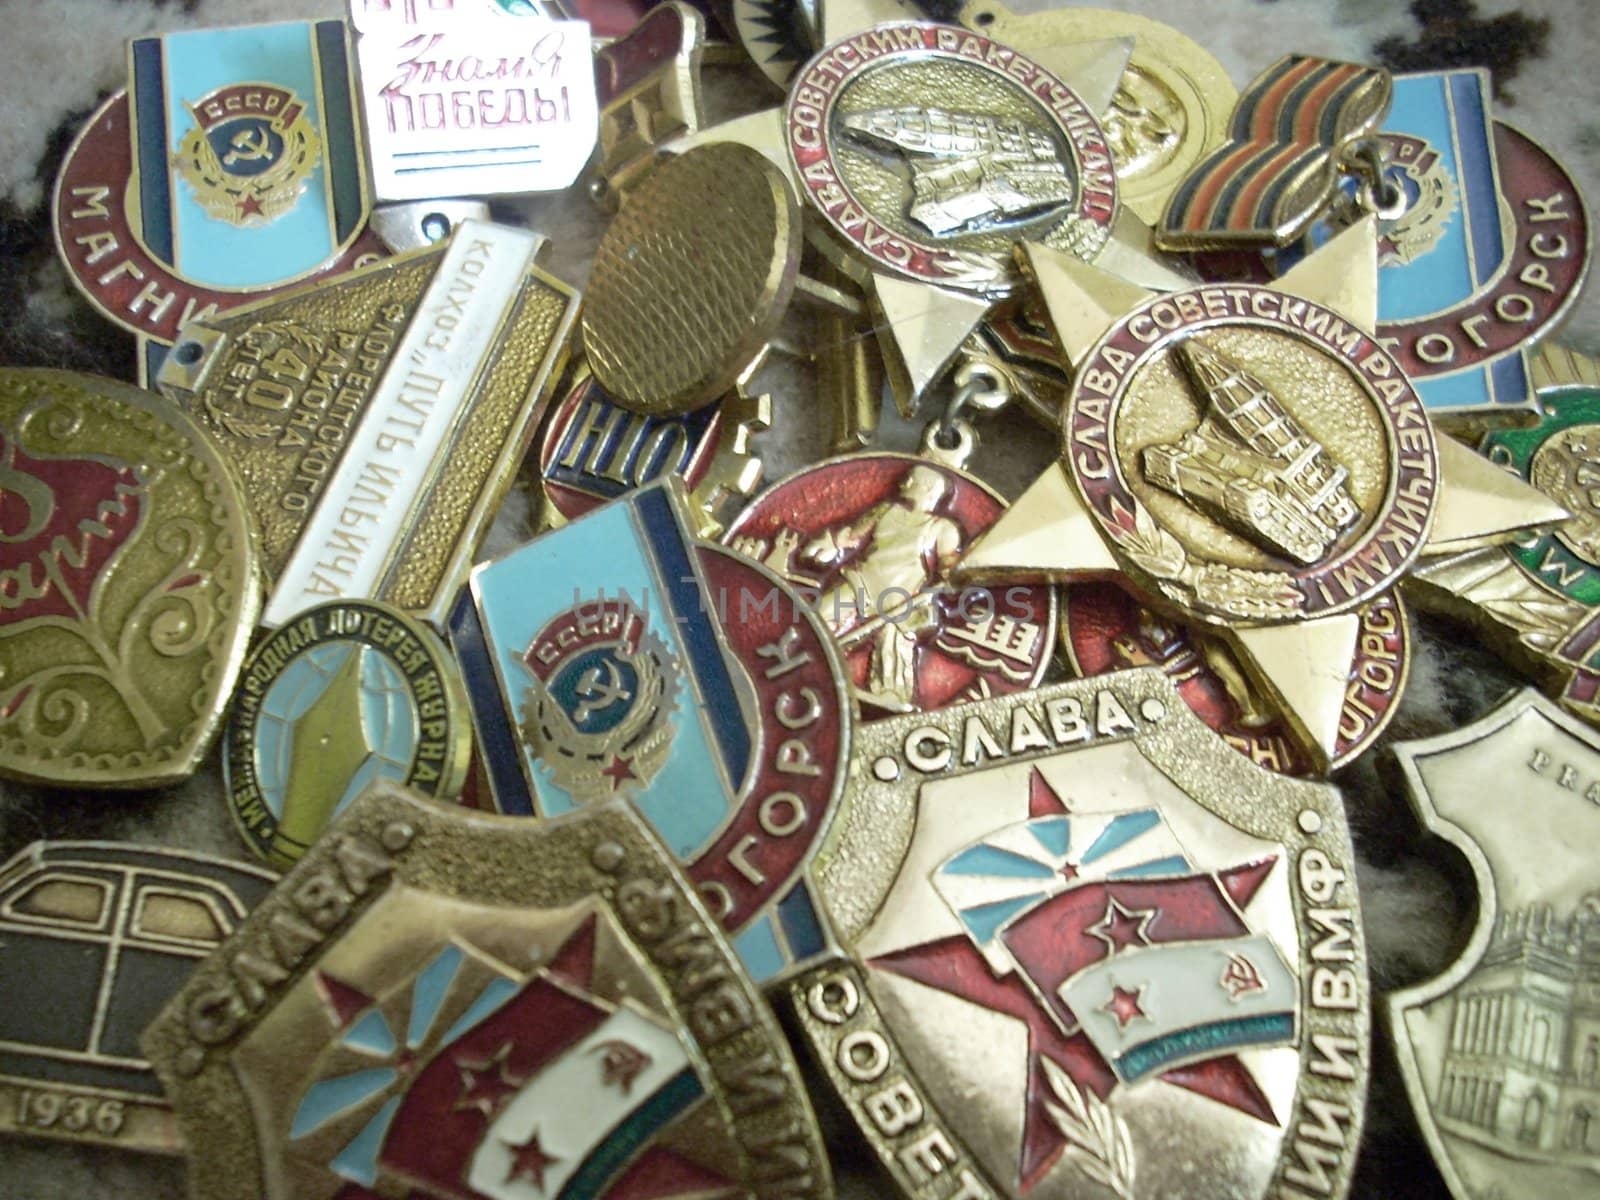 Soviet medals by DOODNICK